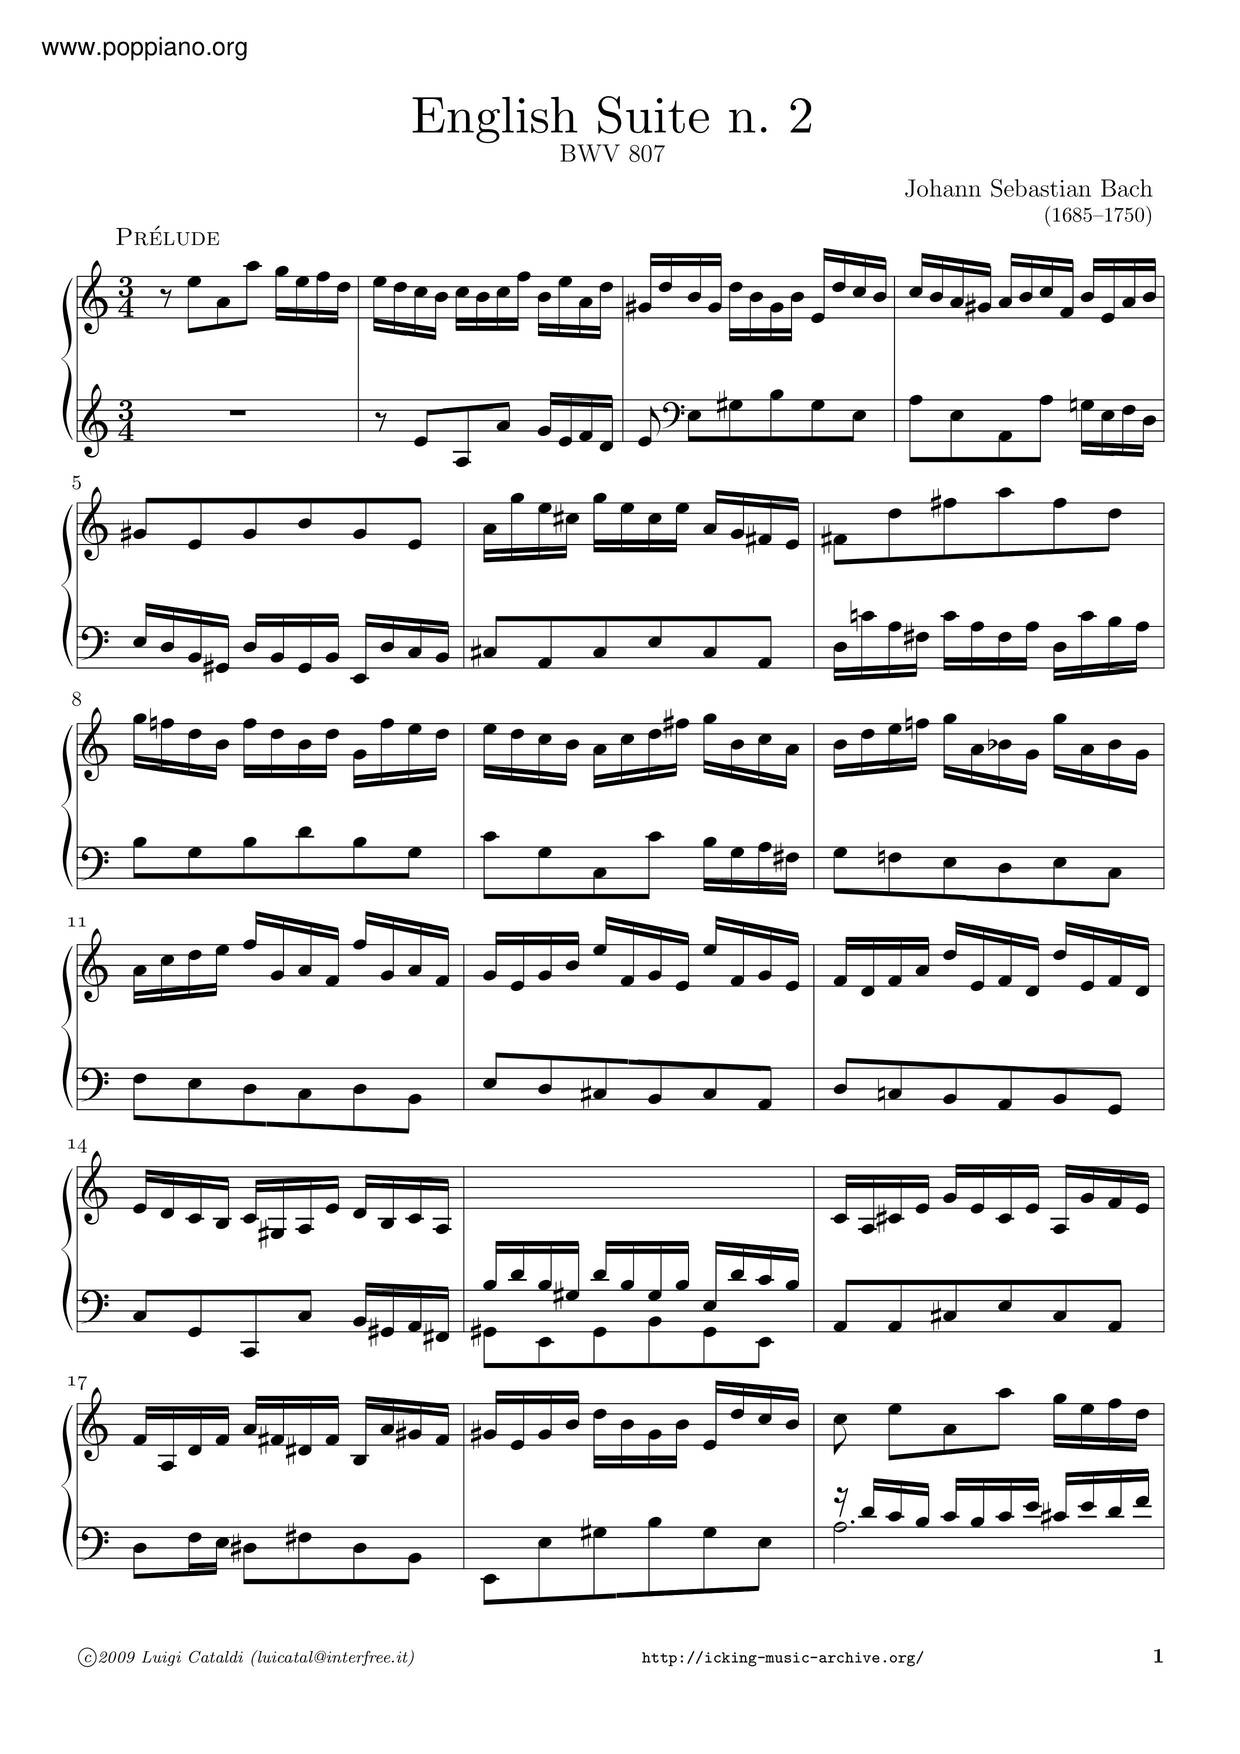 English Suite No. 2, BWV 807ピアノ譜